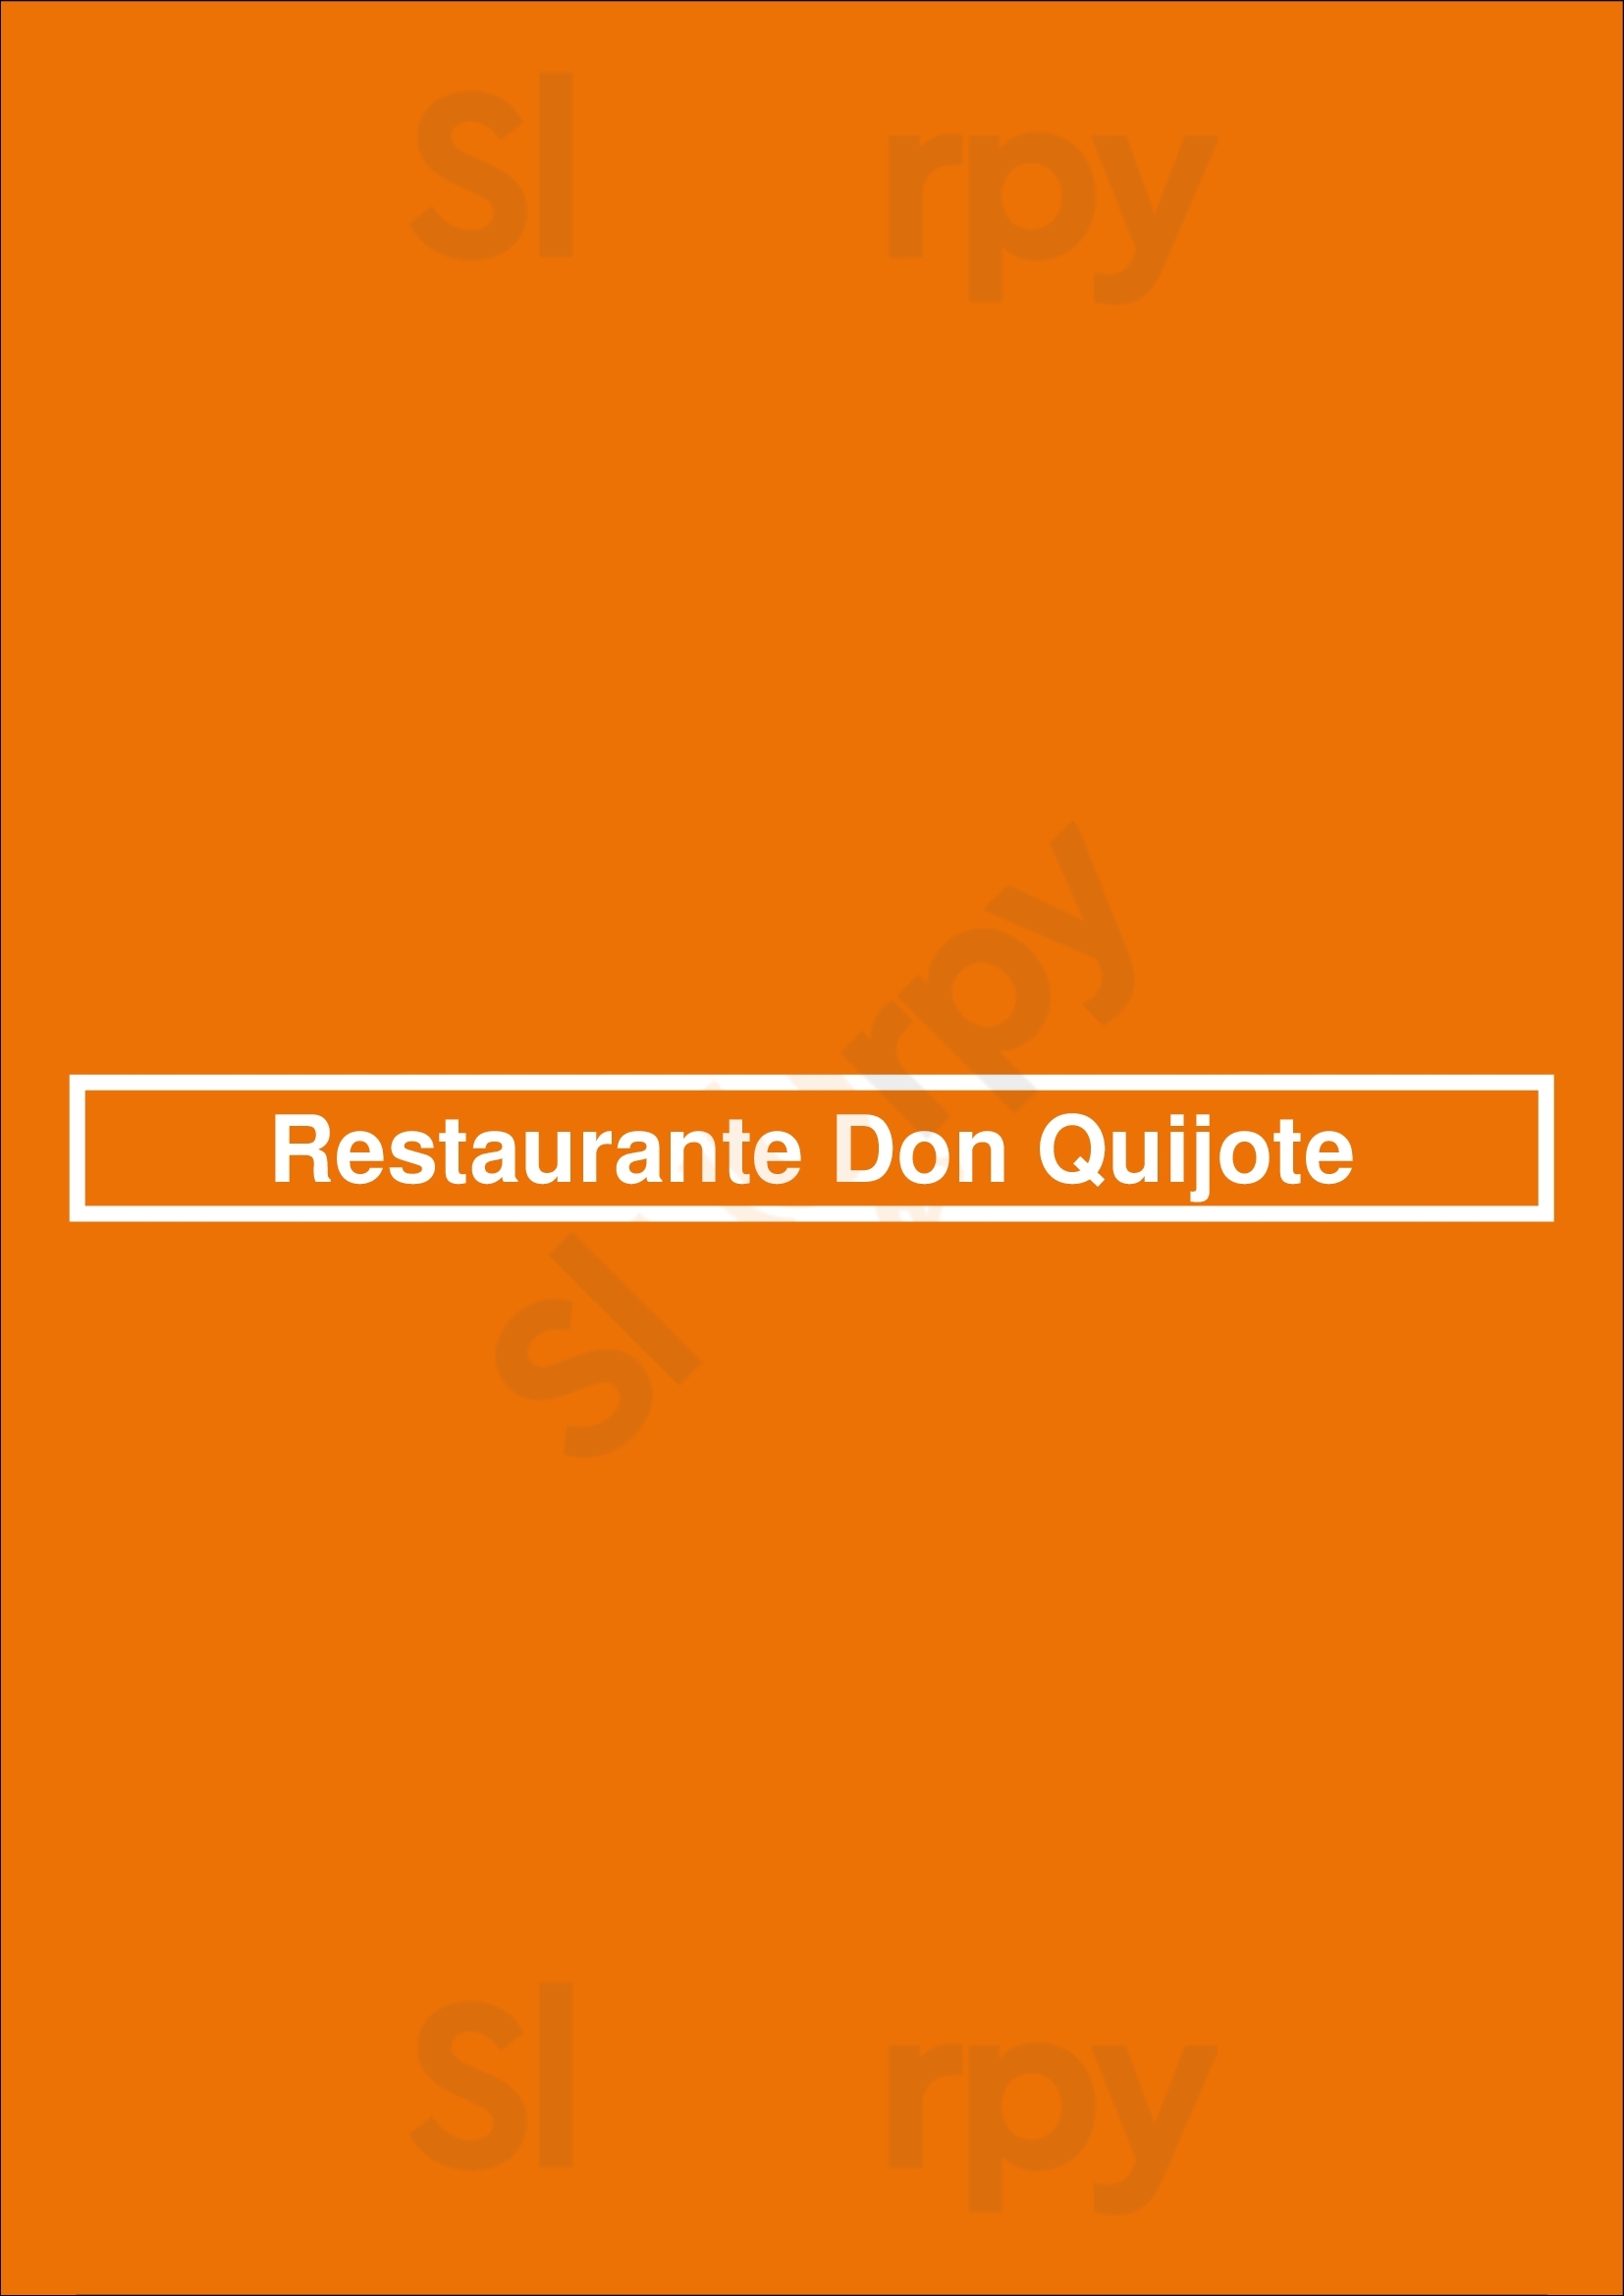 Restaurante Don Quijote Marbella Menu - 1